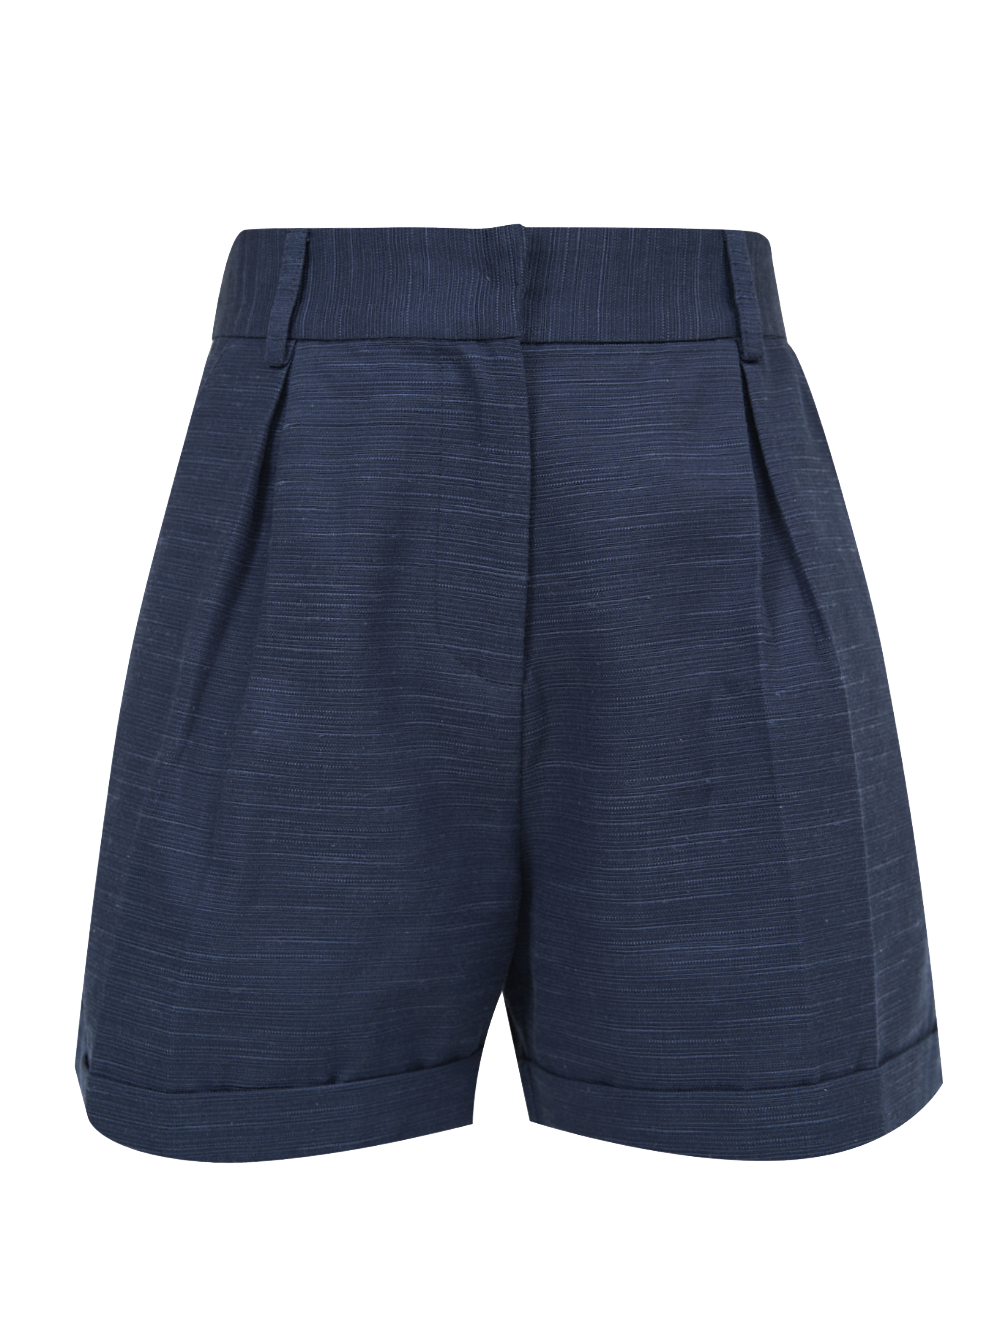 Shorts Avit Azul Marinho